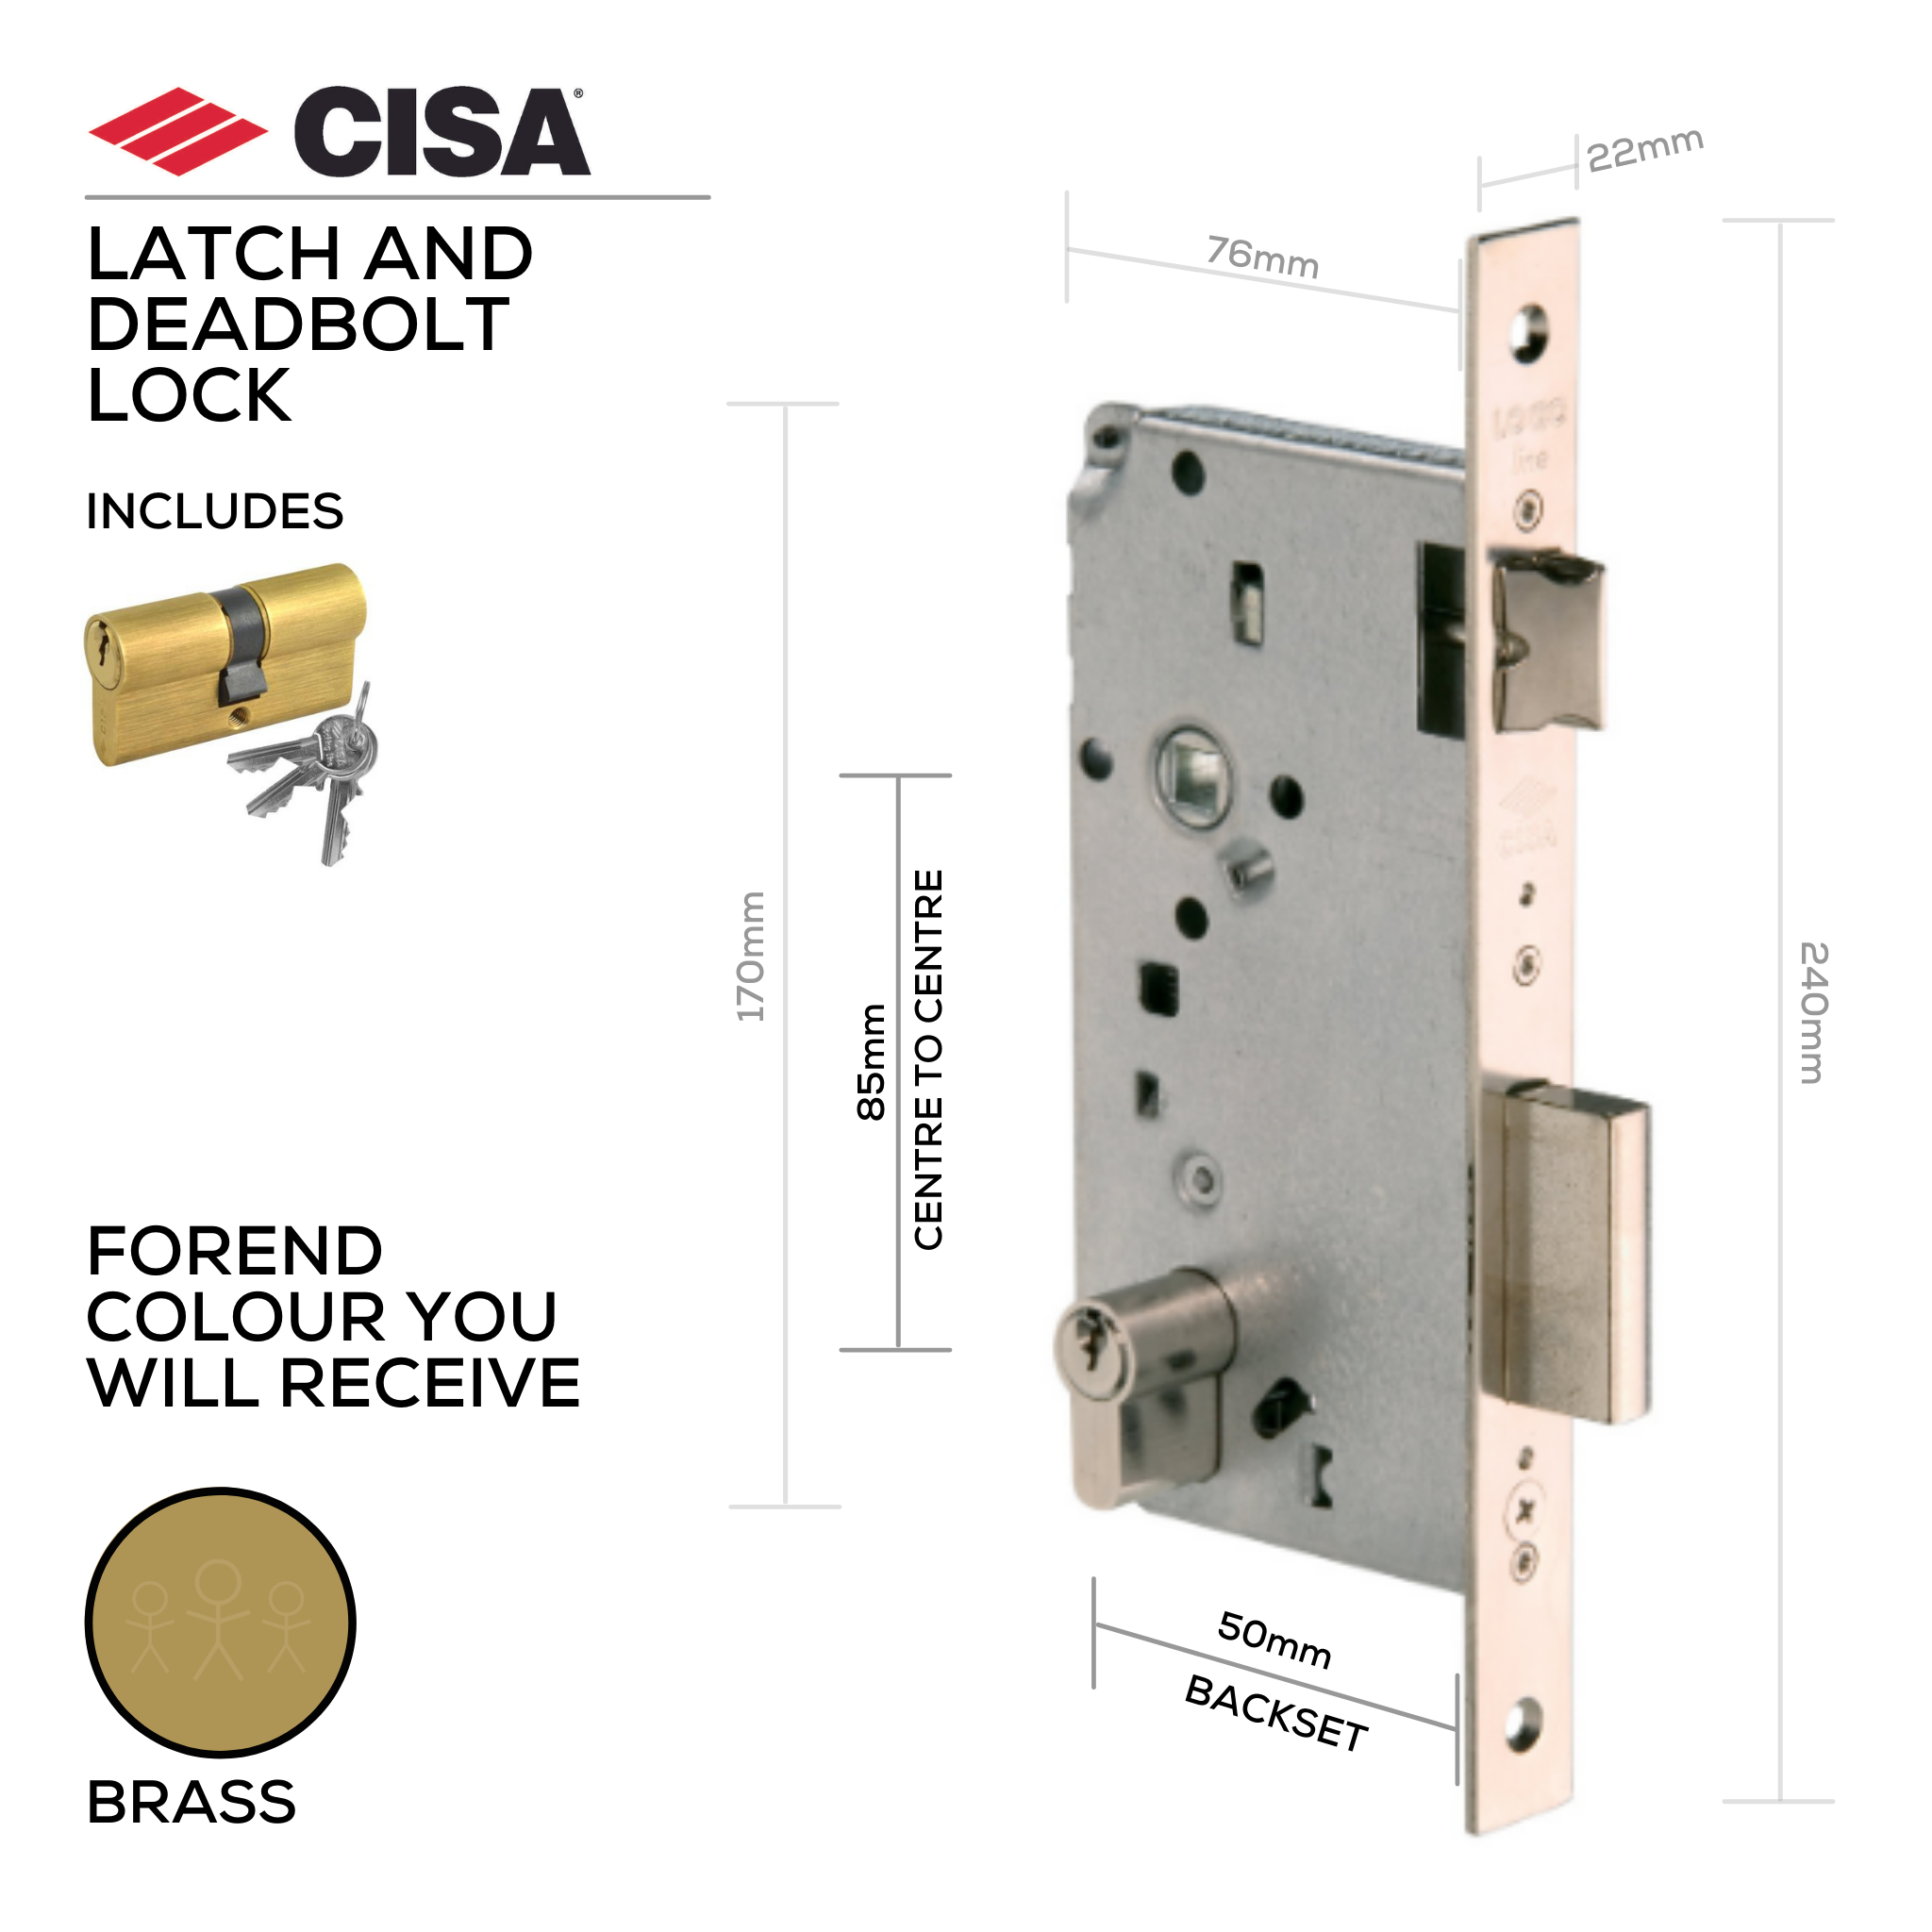 5C611-50-00_W/Cylinder, Latch & Deadbolt Lock, Euro Cylinder, Including Cylinder, 08010-07, 3 Keys - 5 Pins, 50mm (Backset), 85mm (ctc), Brass, CISA